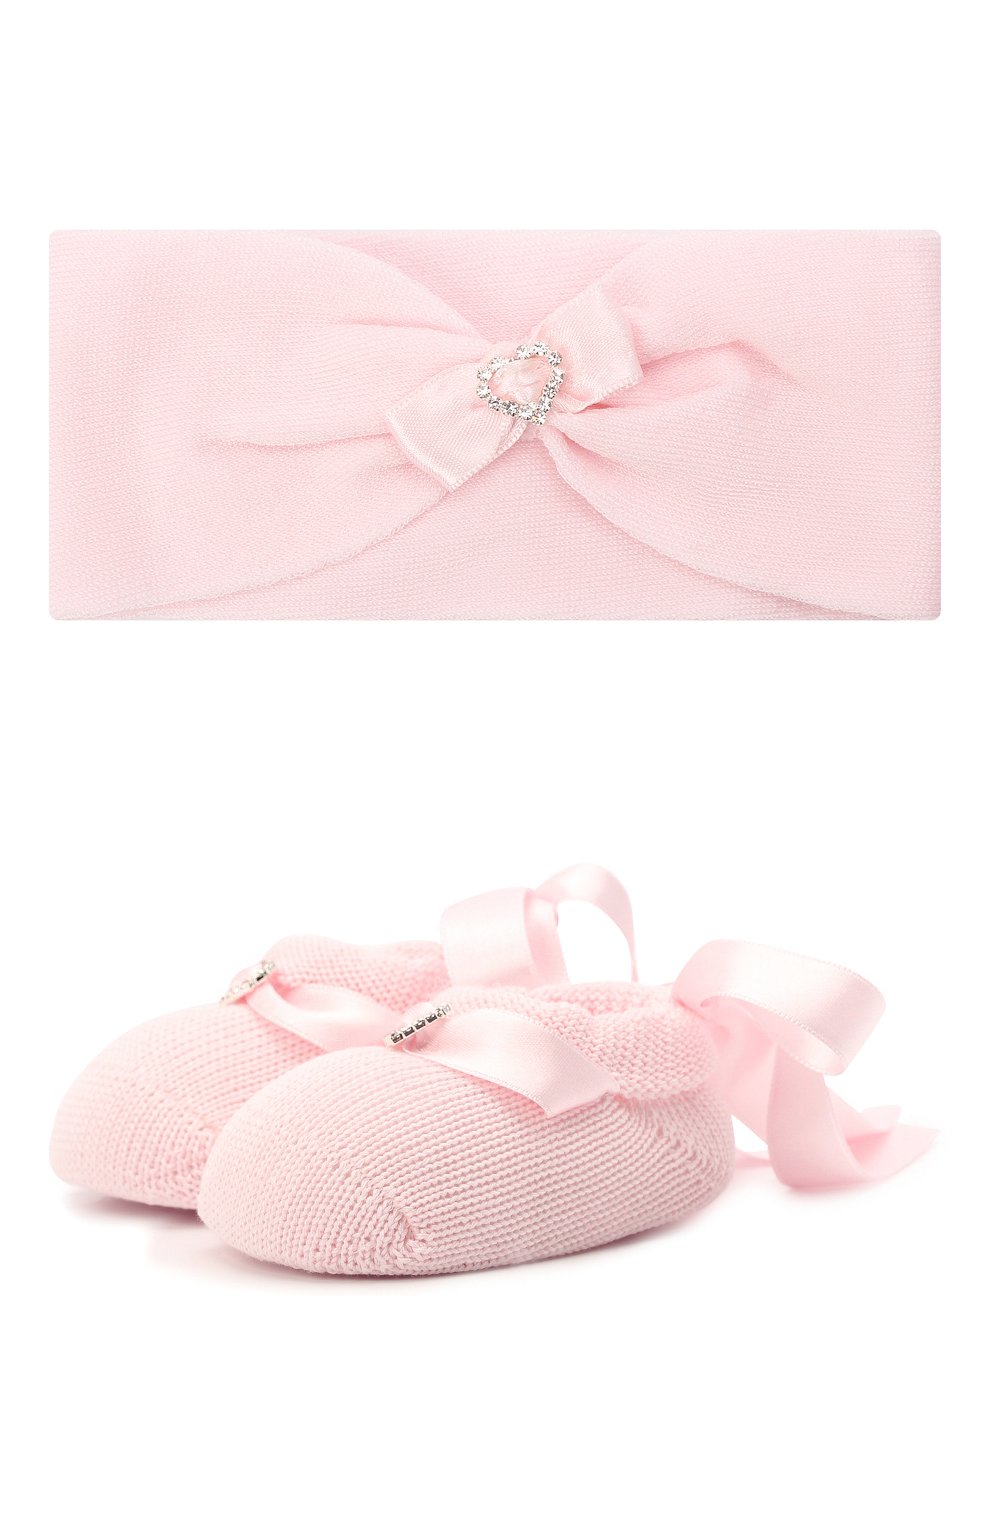 Детский комплект из пинеток и повязки LA PERLA розового цвета, арт. 43990 | Фото 1 (Статус проверки: Проверена категория)